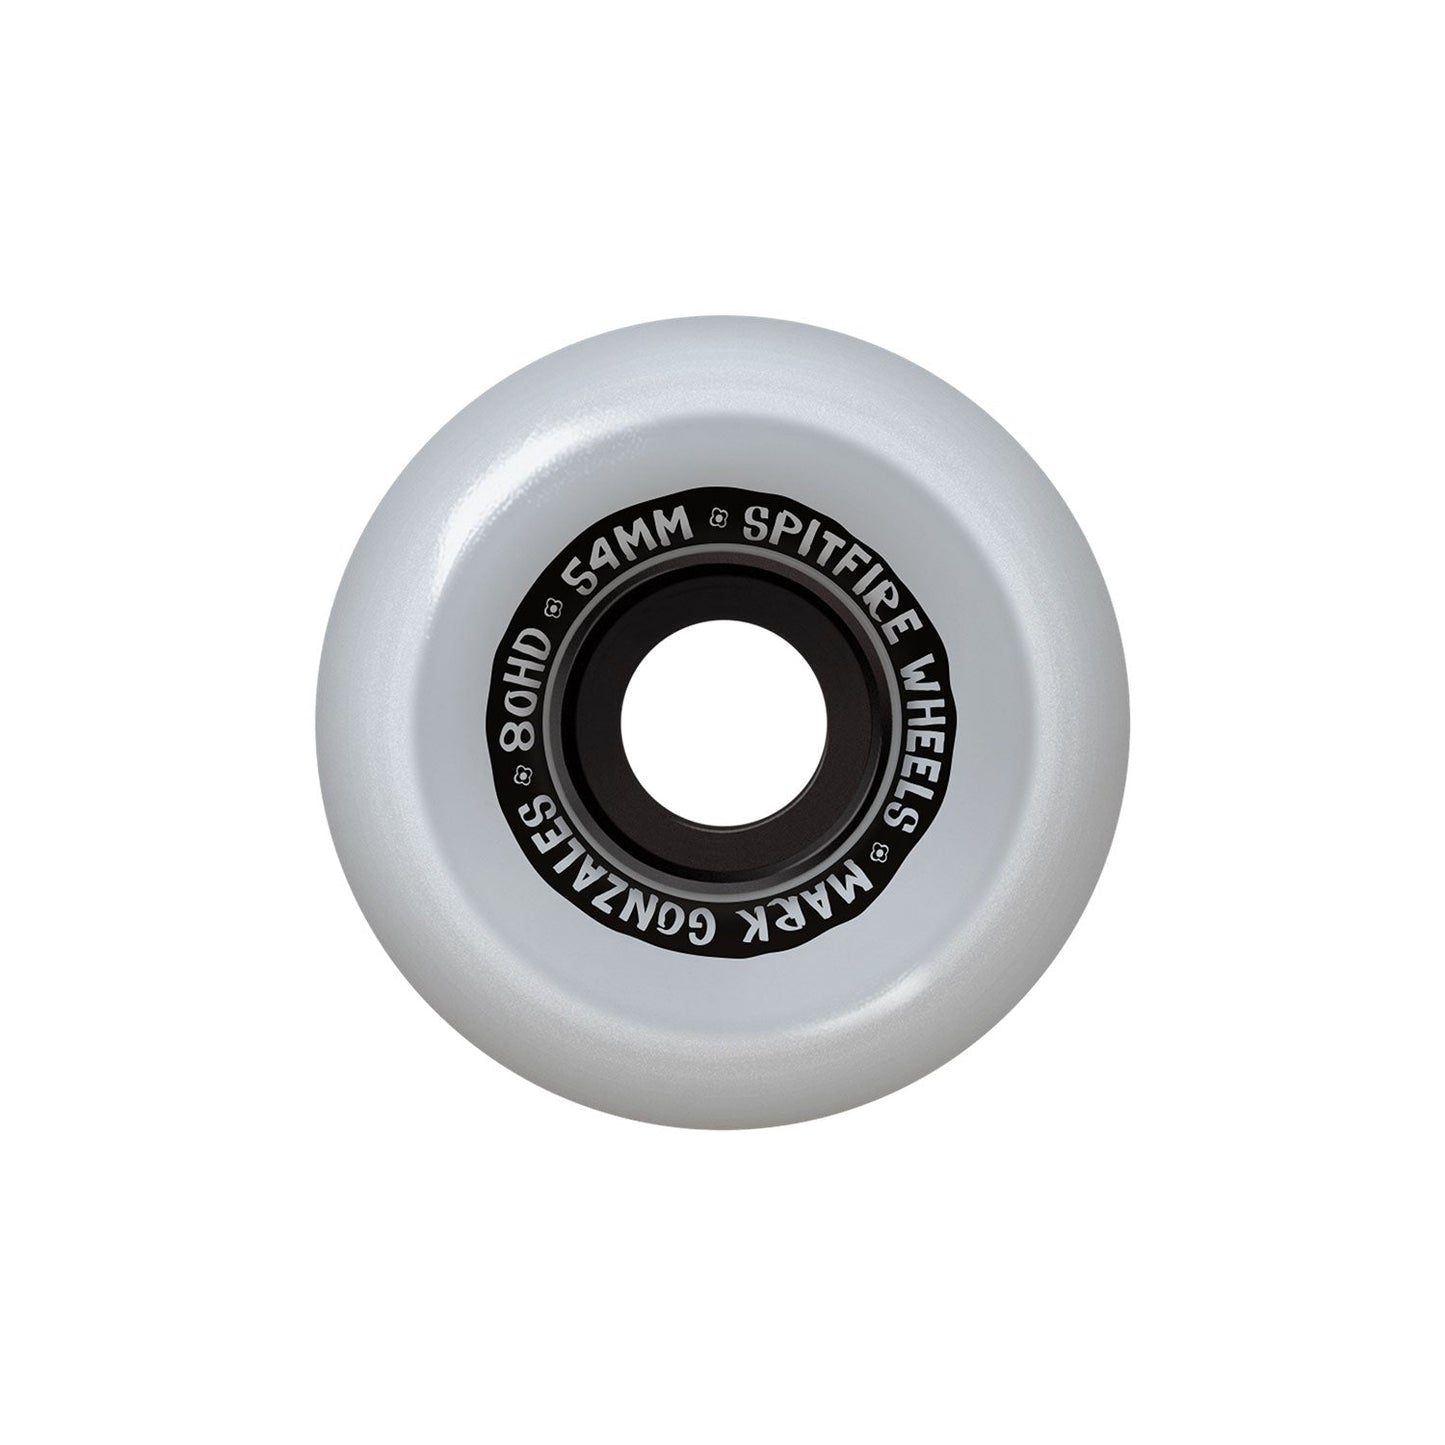 Spitfire Gonz Flower 80Hd Conical Full Wheels (56mm) - Tiki Room Skateboards - 2